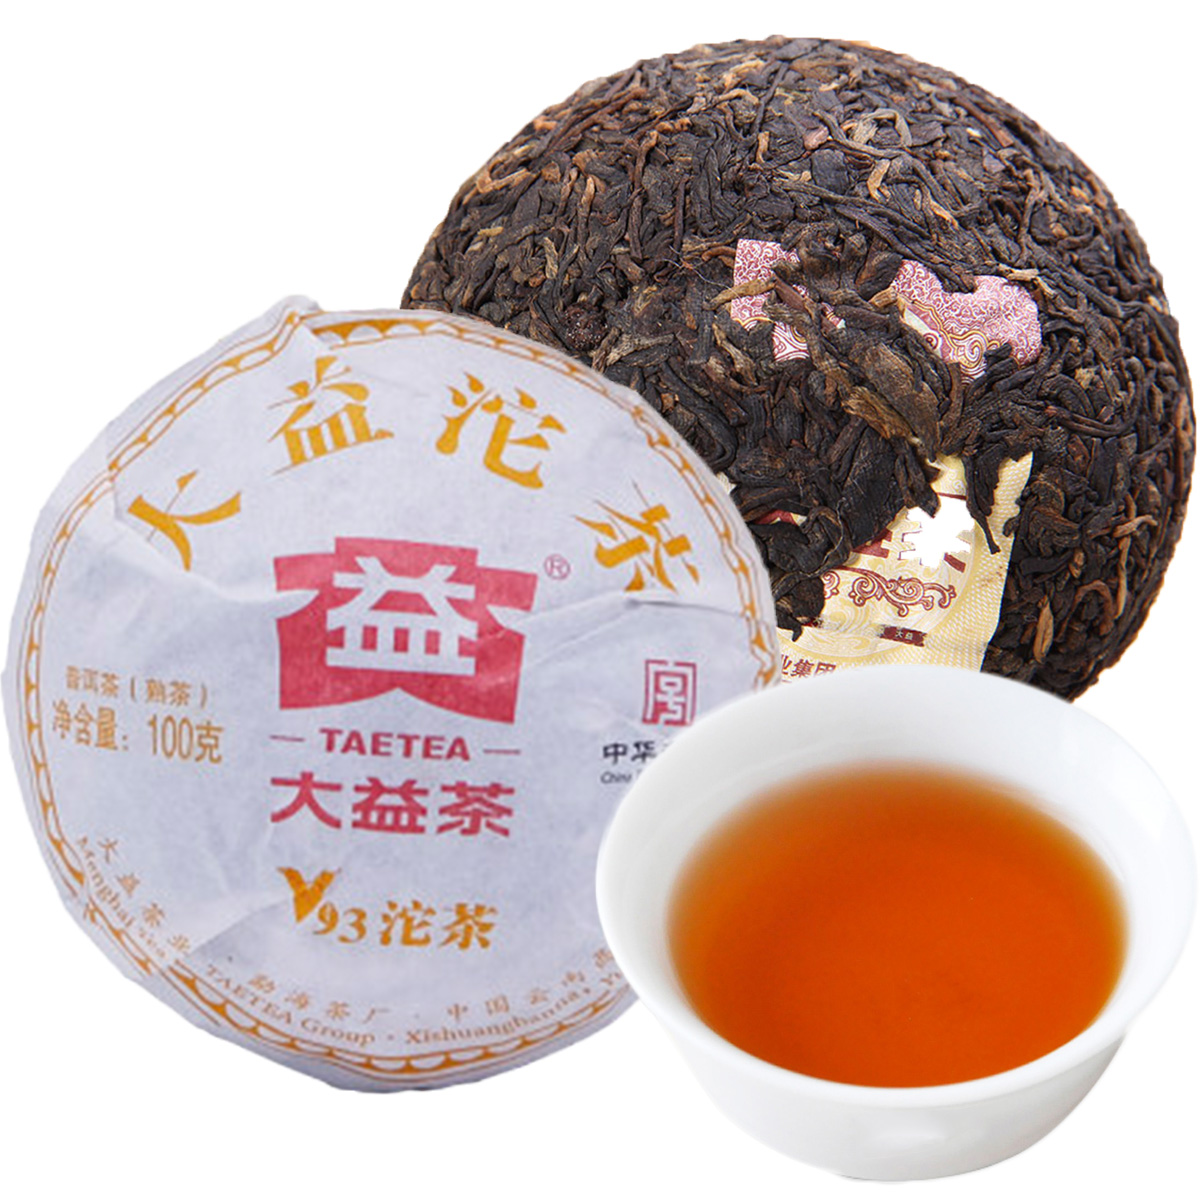 

100g Ripe Pu Er Tea Yunnan Dayi V93 Pu er cha Organic Pu'er Oldest Tree Cooked Puer Natural Black Puerh Tae Cake Factory Direct Sales